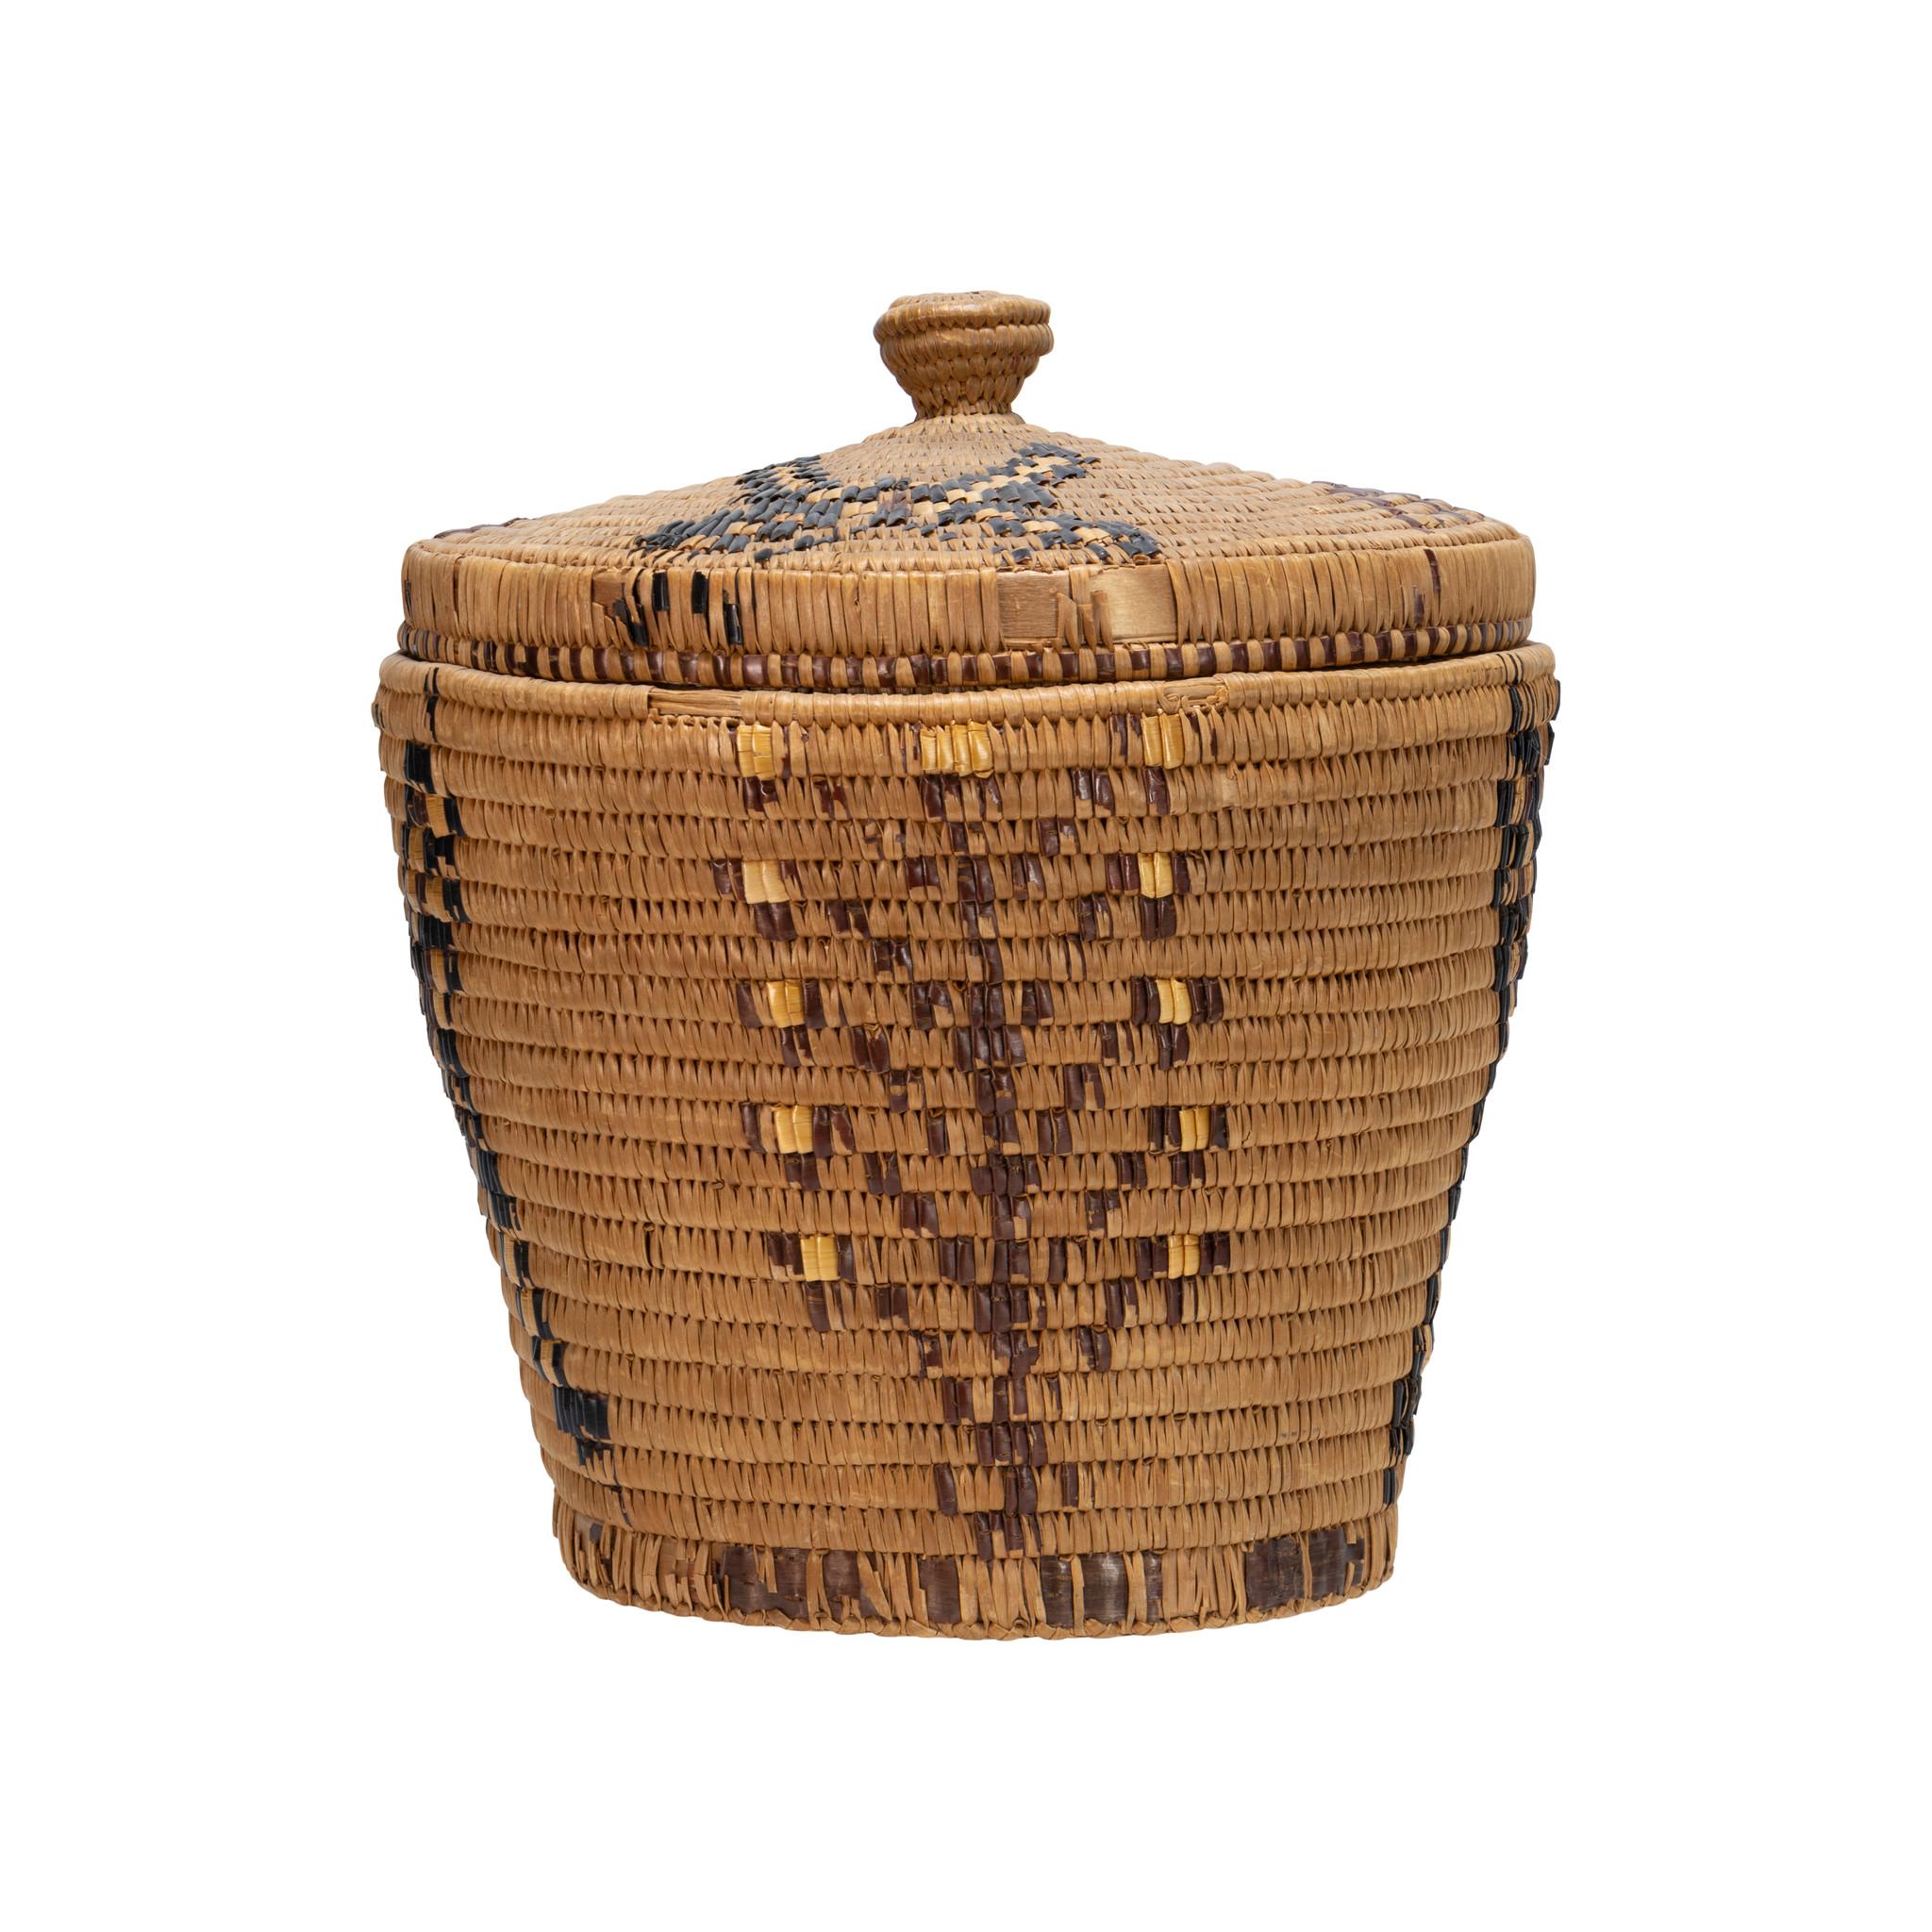 Salish lidded basket with butterflies and trees.

Period: Last quarter 19th century
Origin: Salish, Northwest
Size: 14